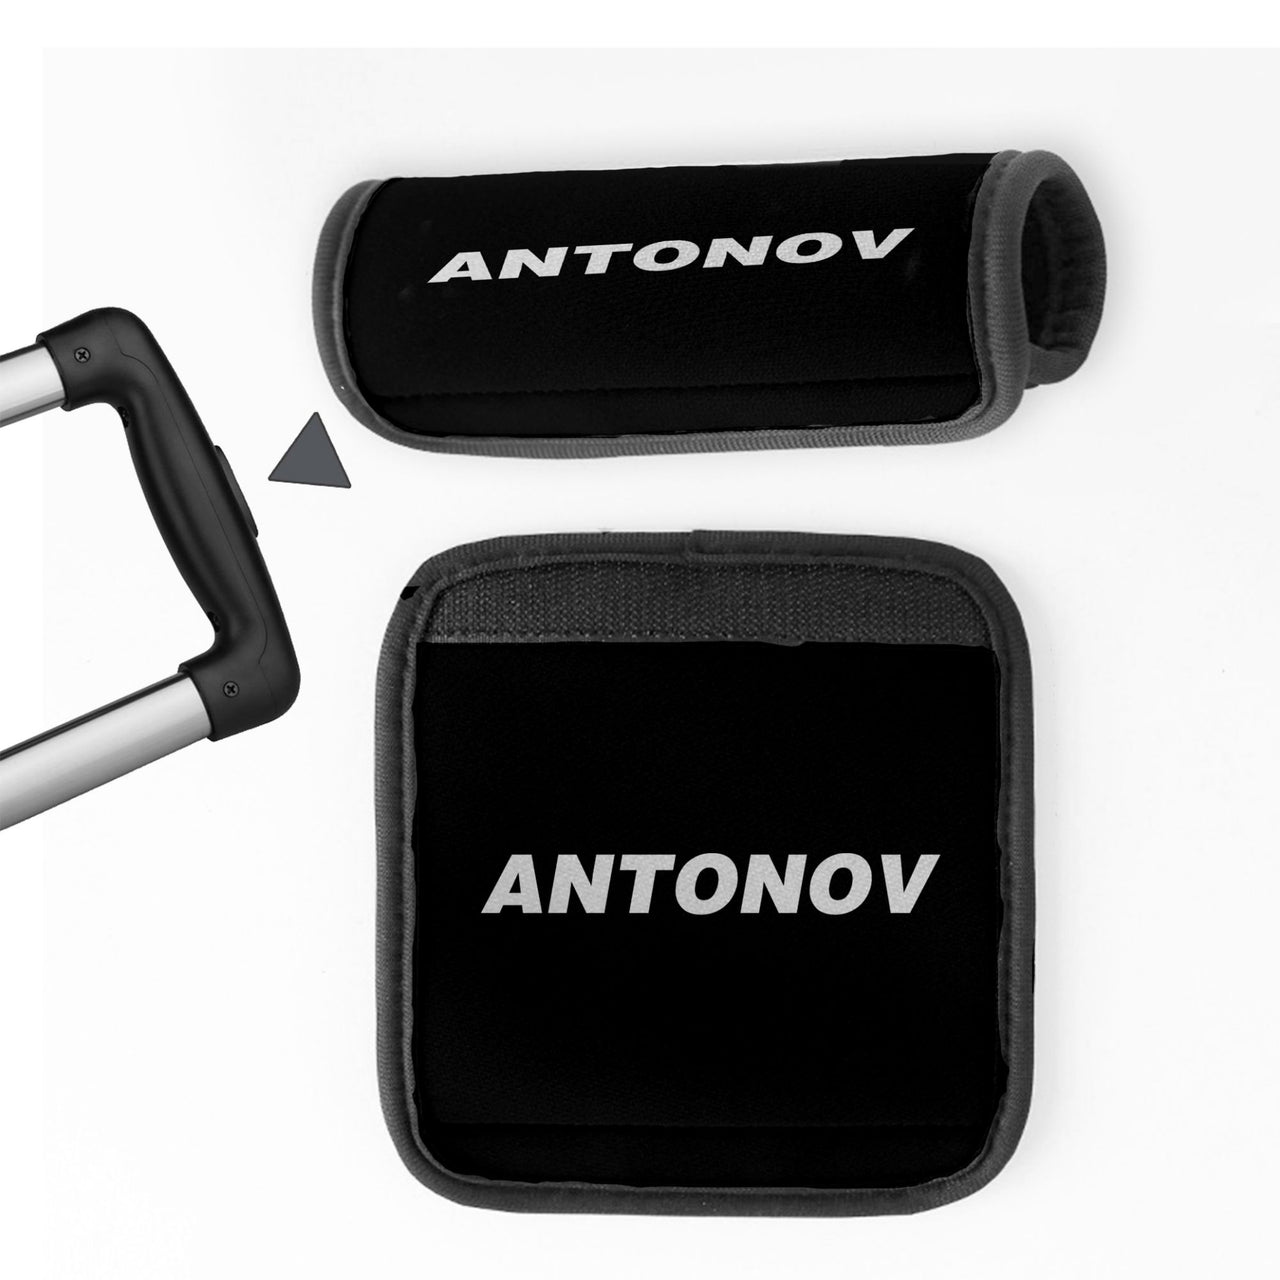 Antonov & Text Designed Neoprene Luggage Handle Covers